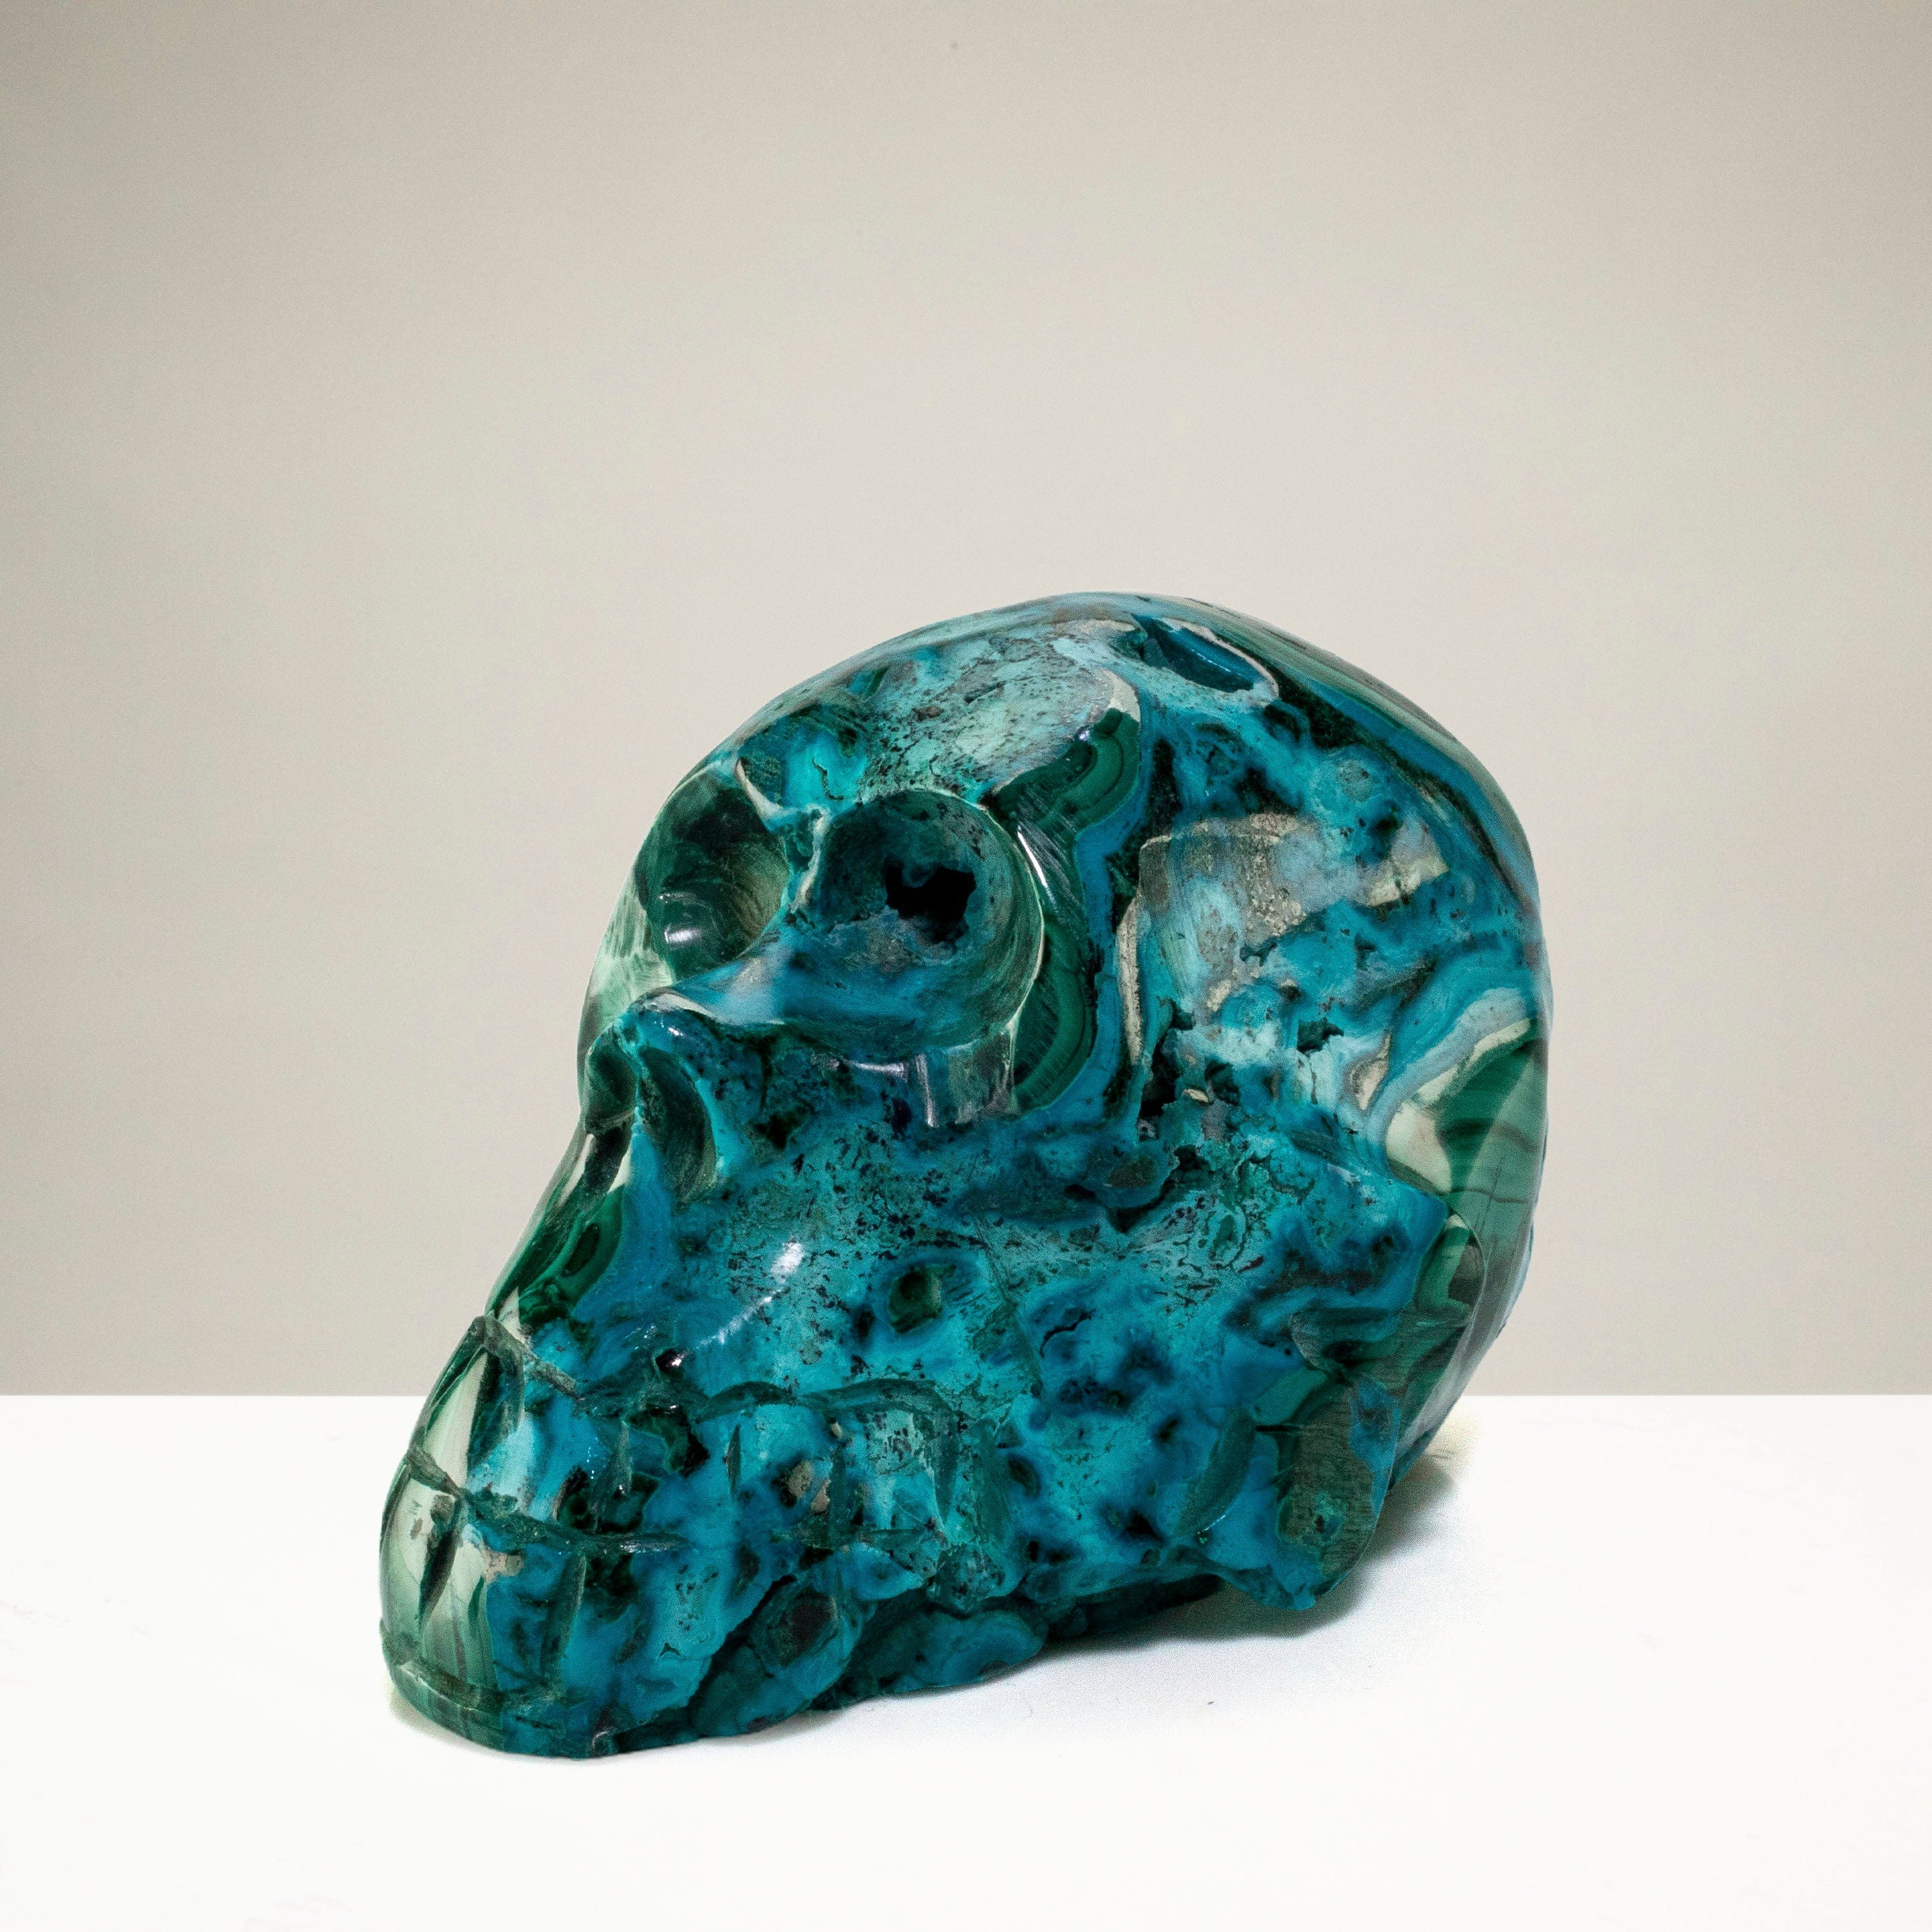 Kalifano Malachite Chrysocolla Skull Carving 3" / 167g SK700-CRY.001